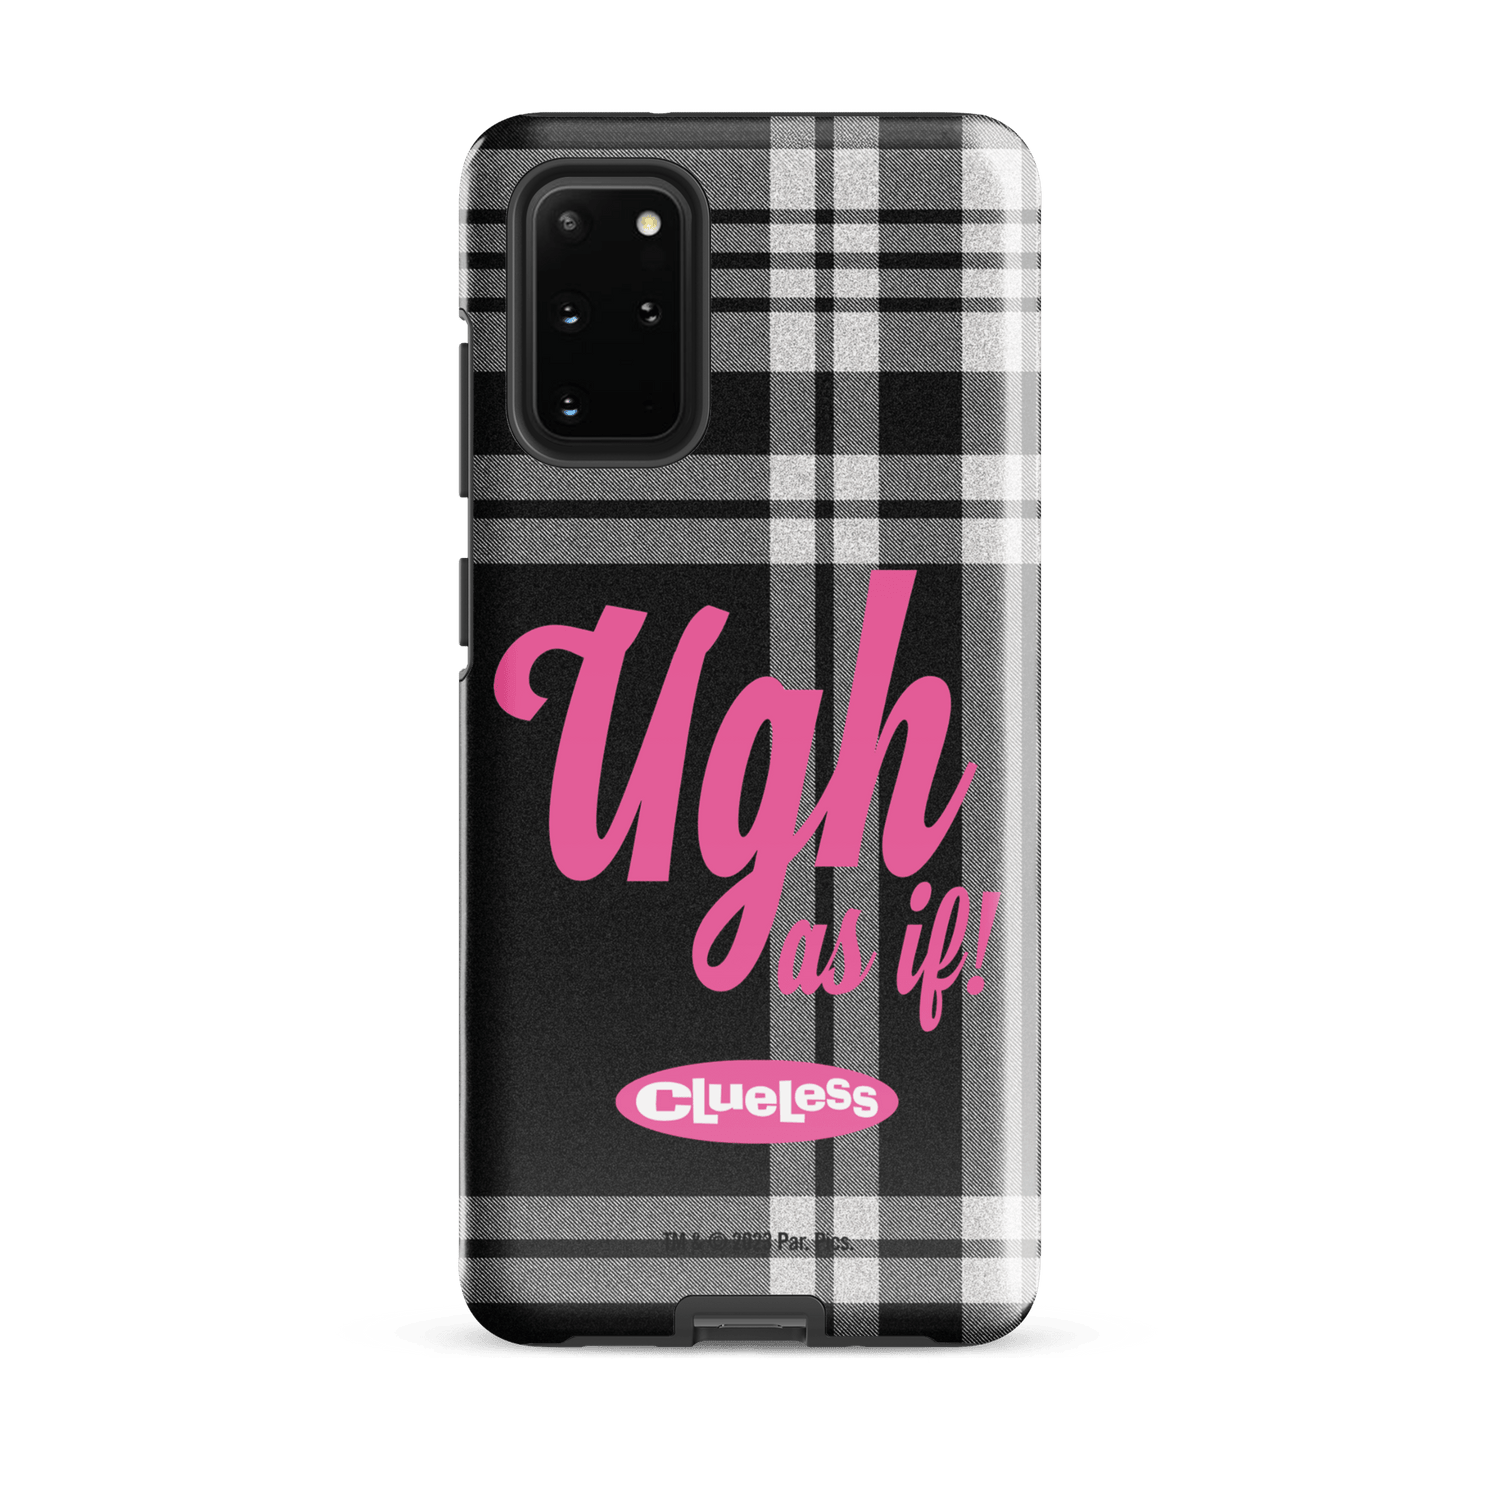 Clueless Ugh As If Tough Phone Case - Samsung - Paramount Shop